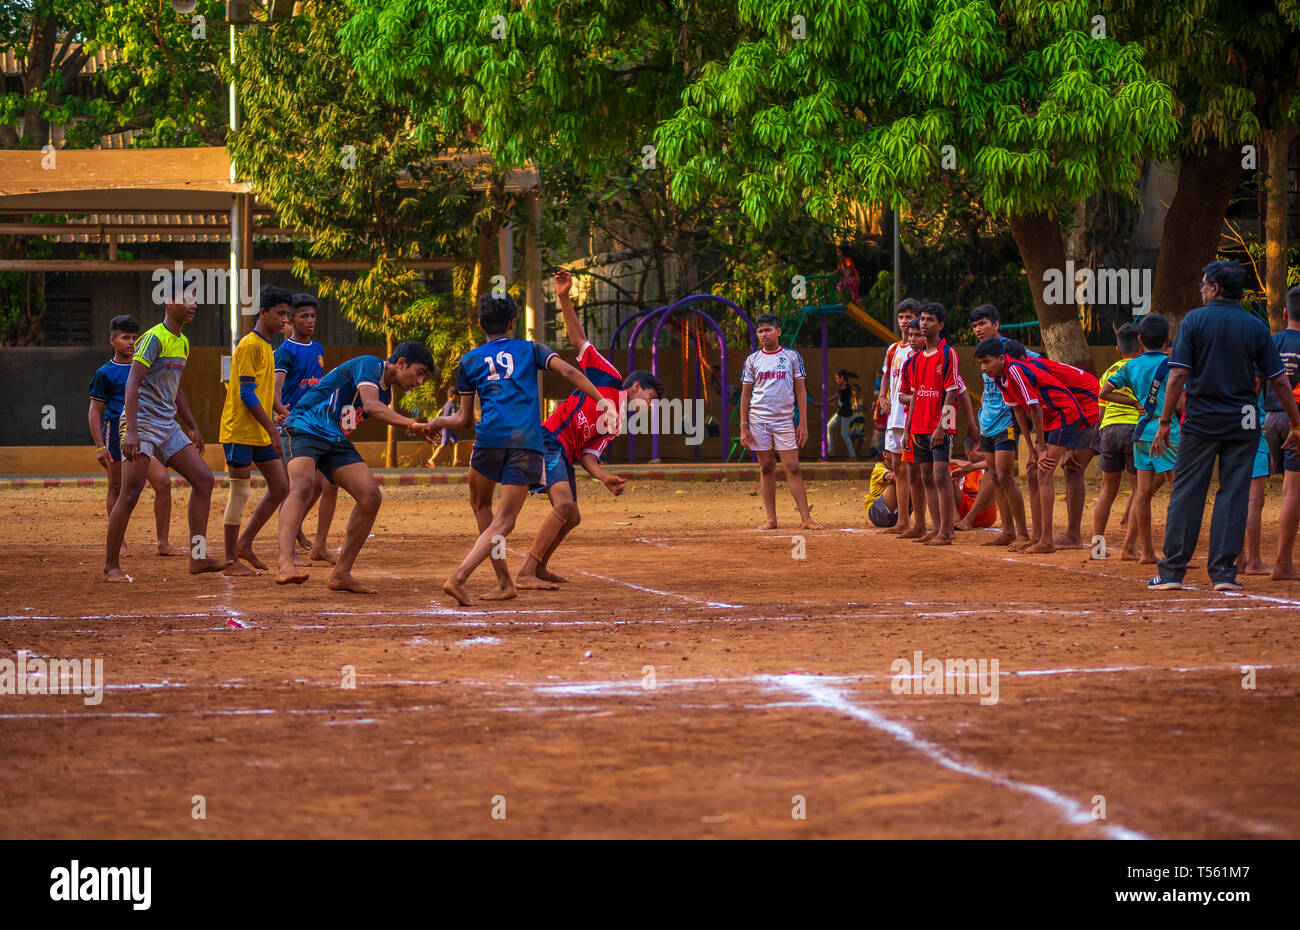 Mumbai, India - April 12, 2019 : Indias regional sport Kabaddi practiced by kids at local Mumbai ground Stock Photo